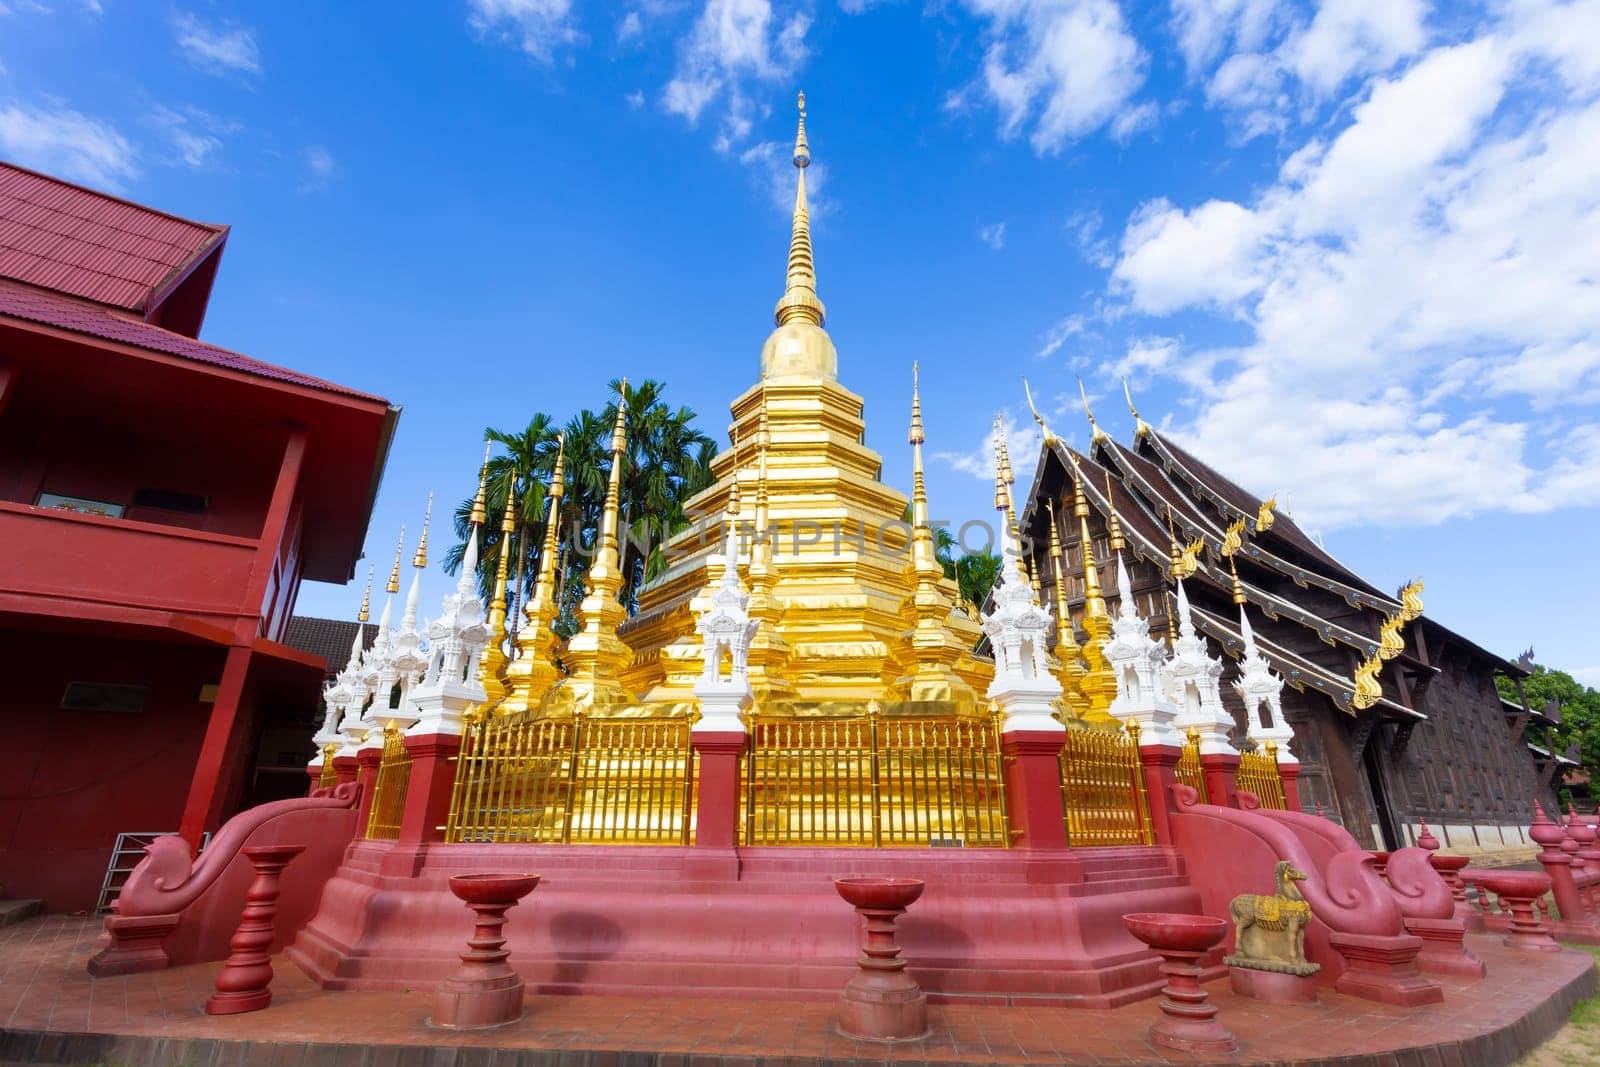 The golden pagoda of Wat Pan Tao in Chiang Mai city, Thailand by Gamjai